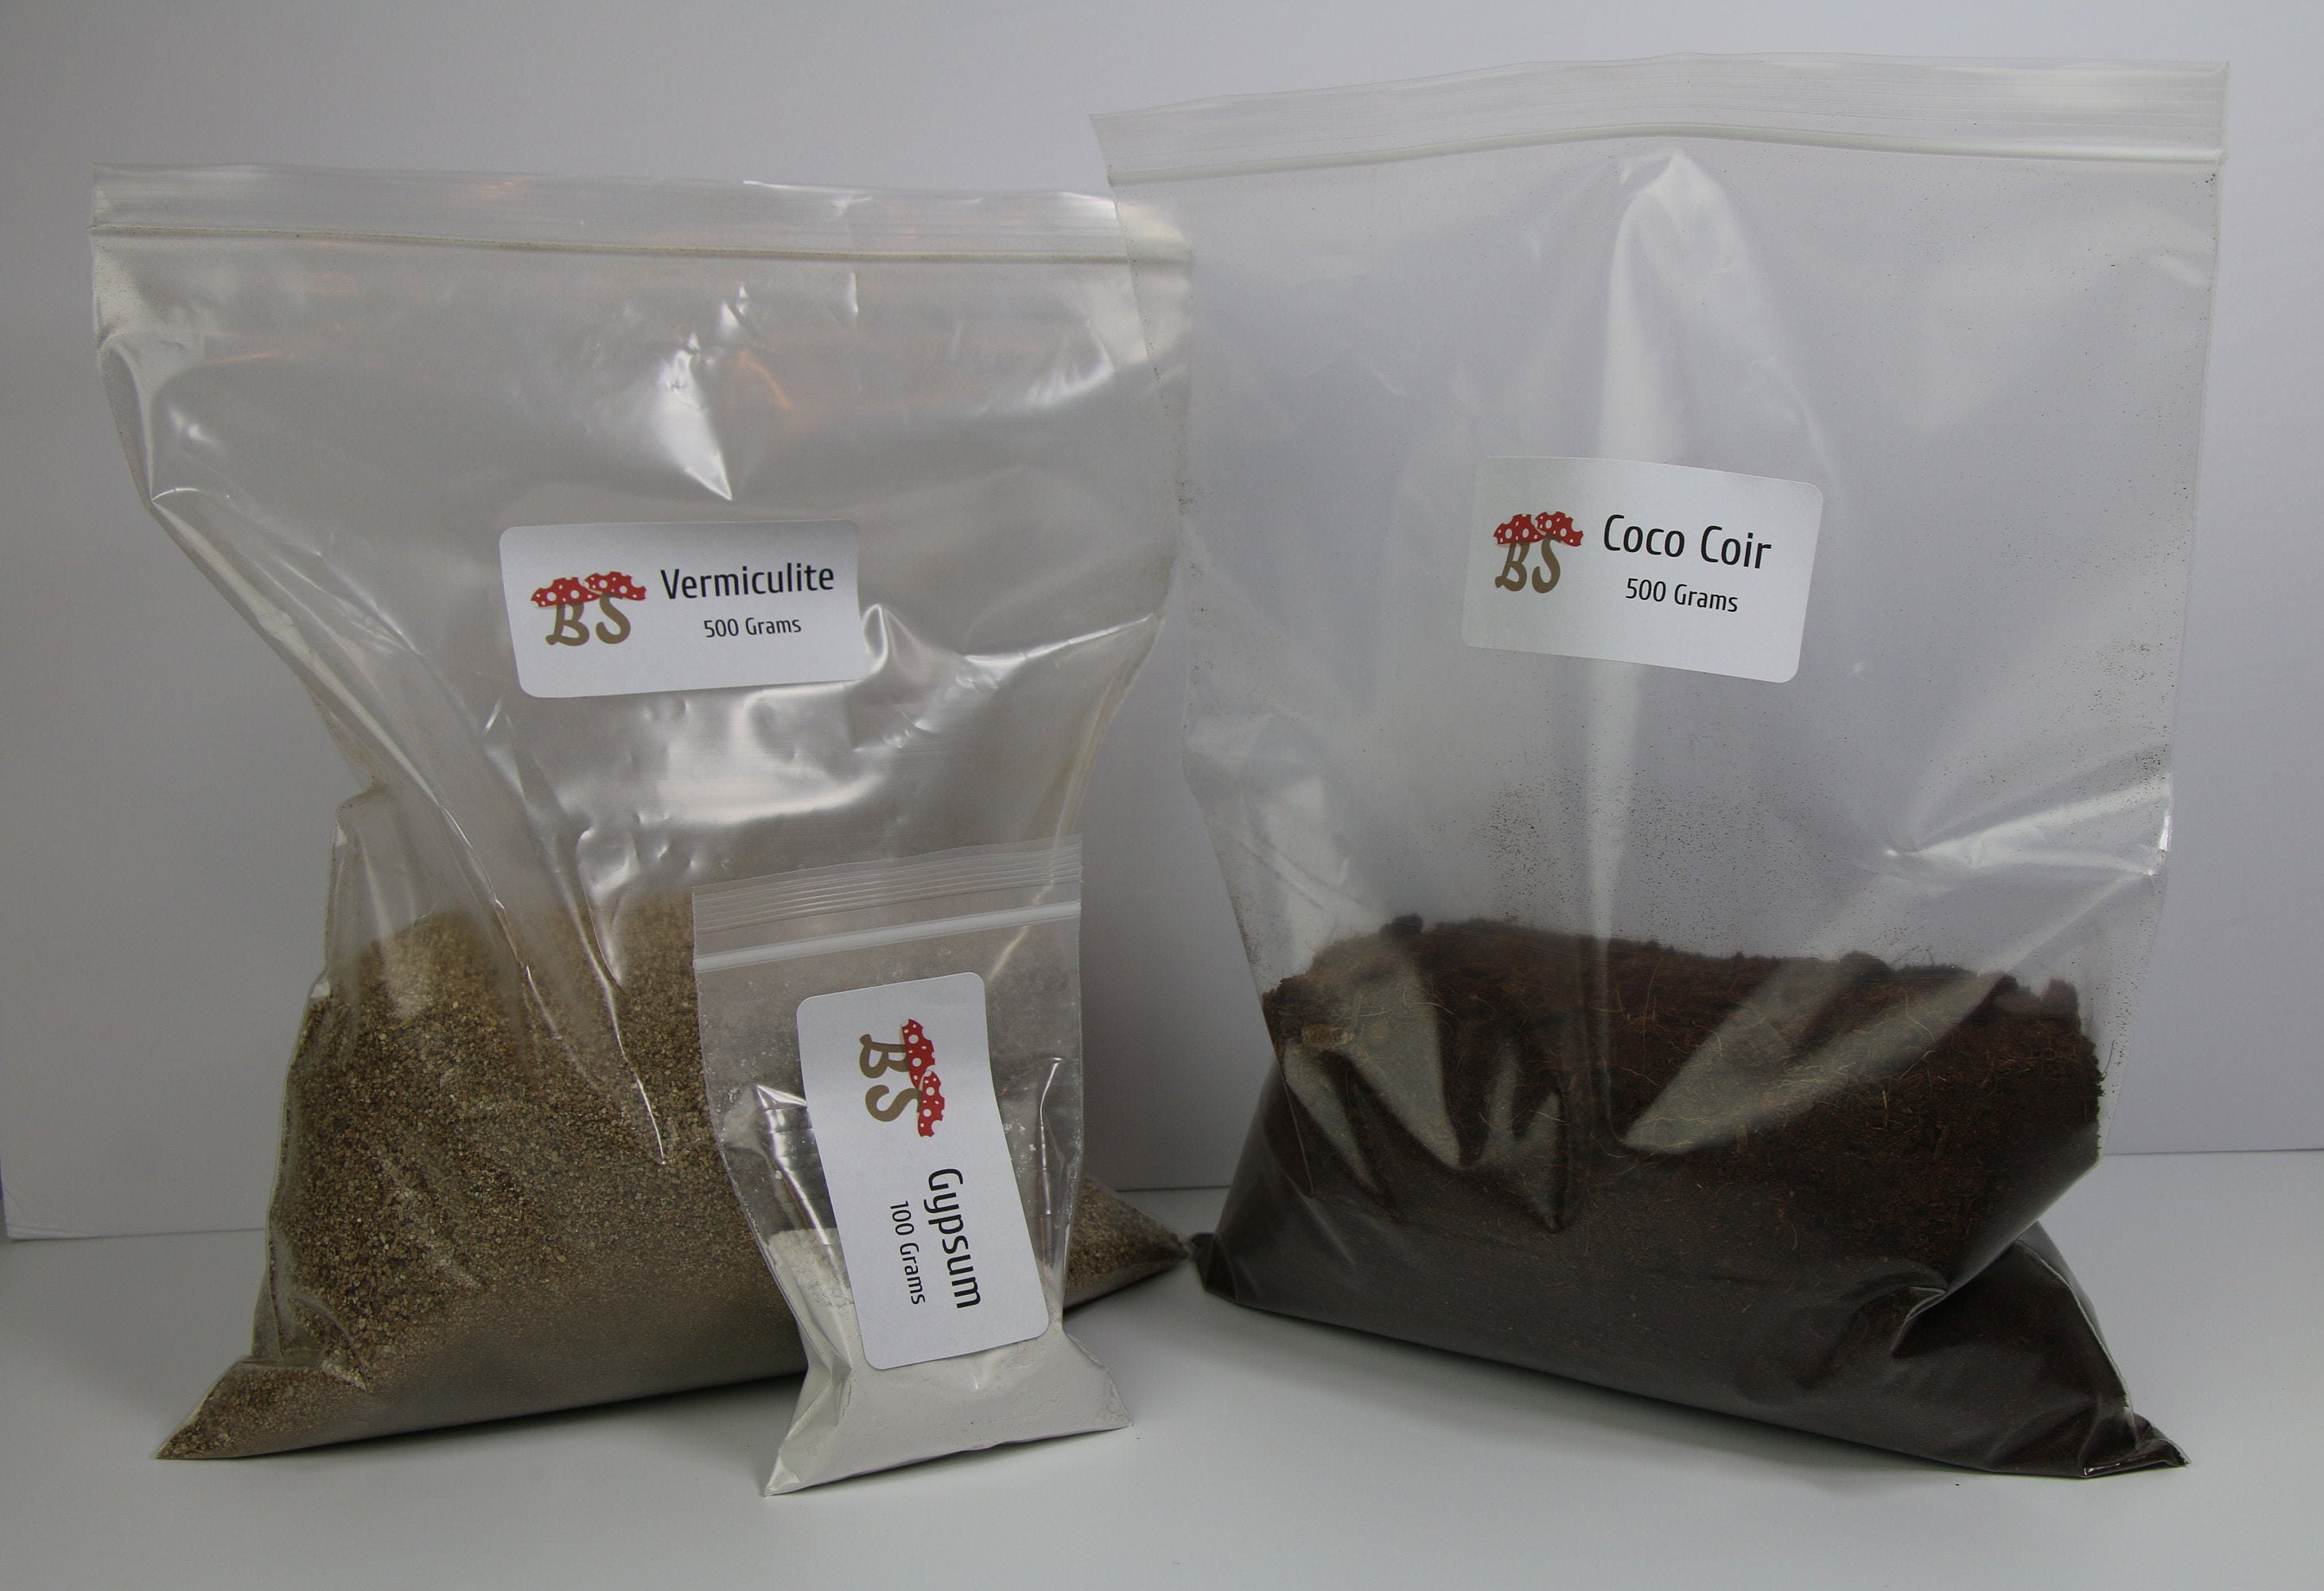 Dry Bulk Substrate Ingredients Coco Coir Vermiculite Etsy